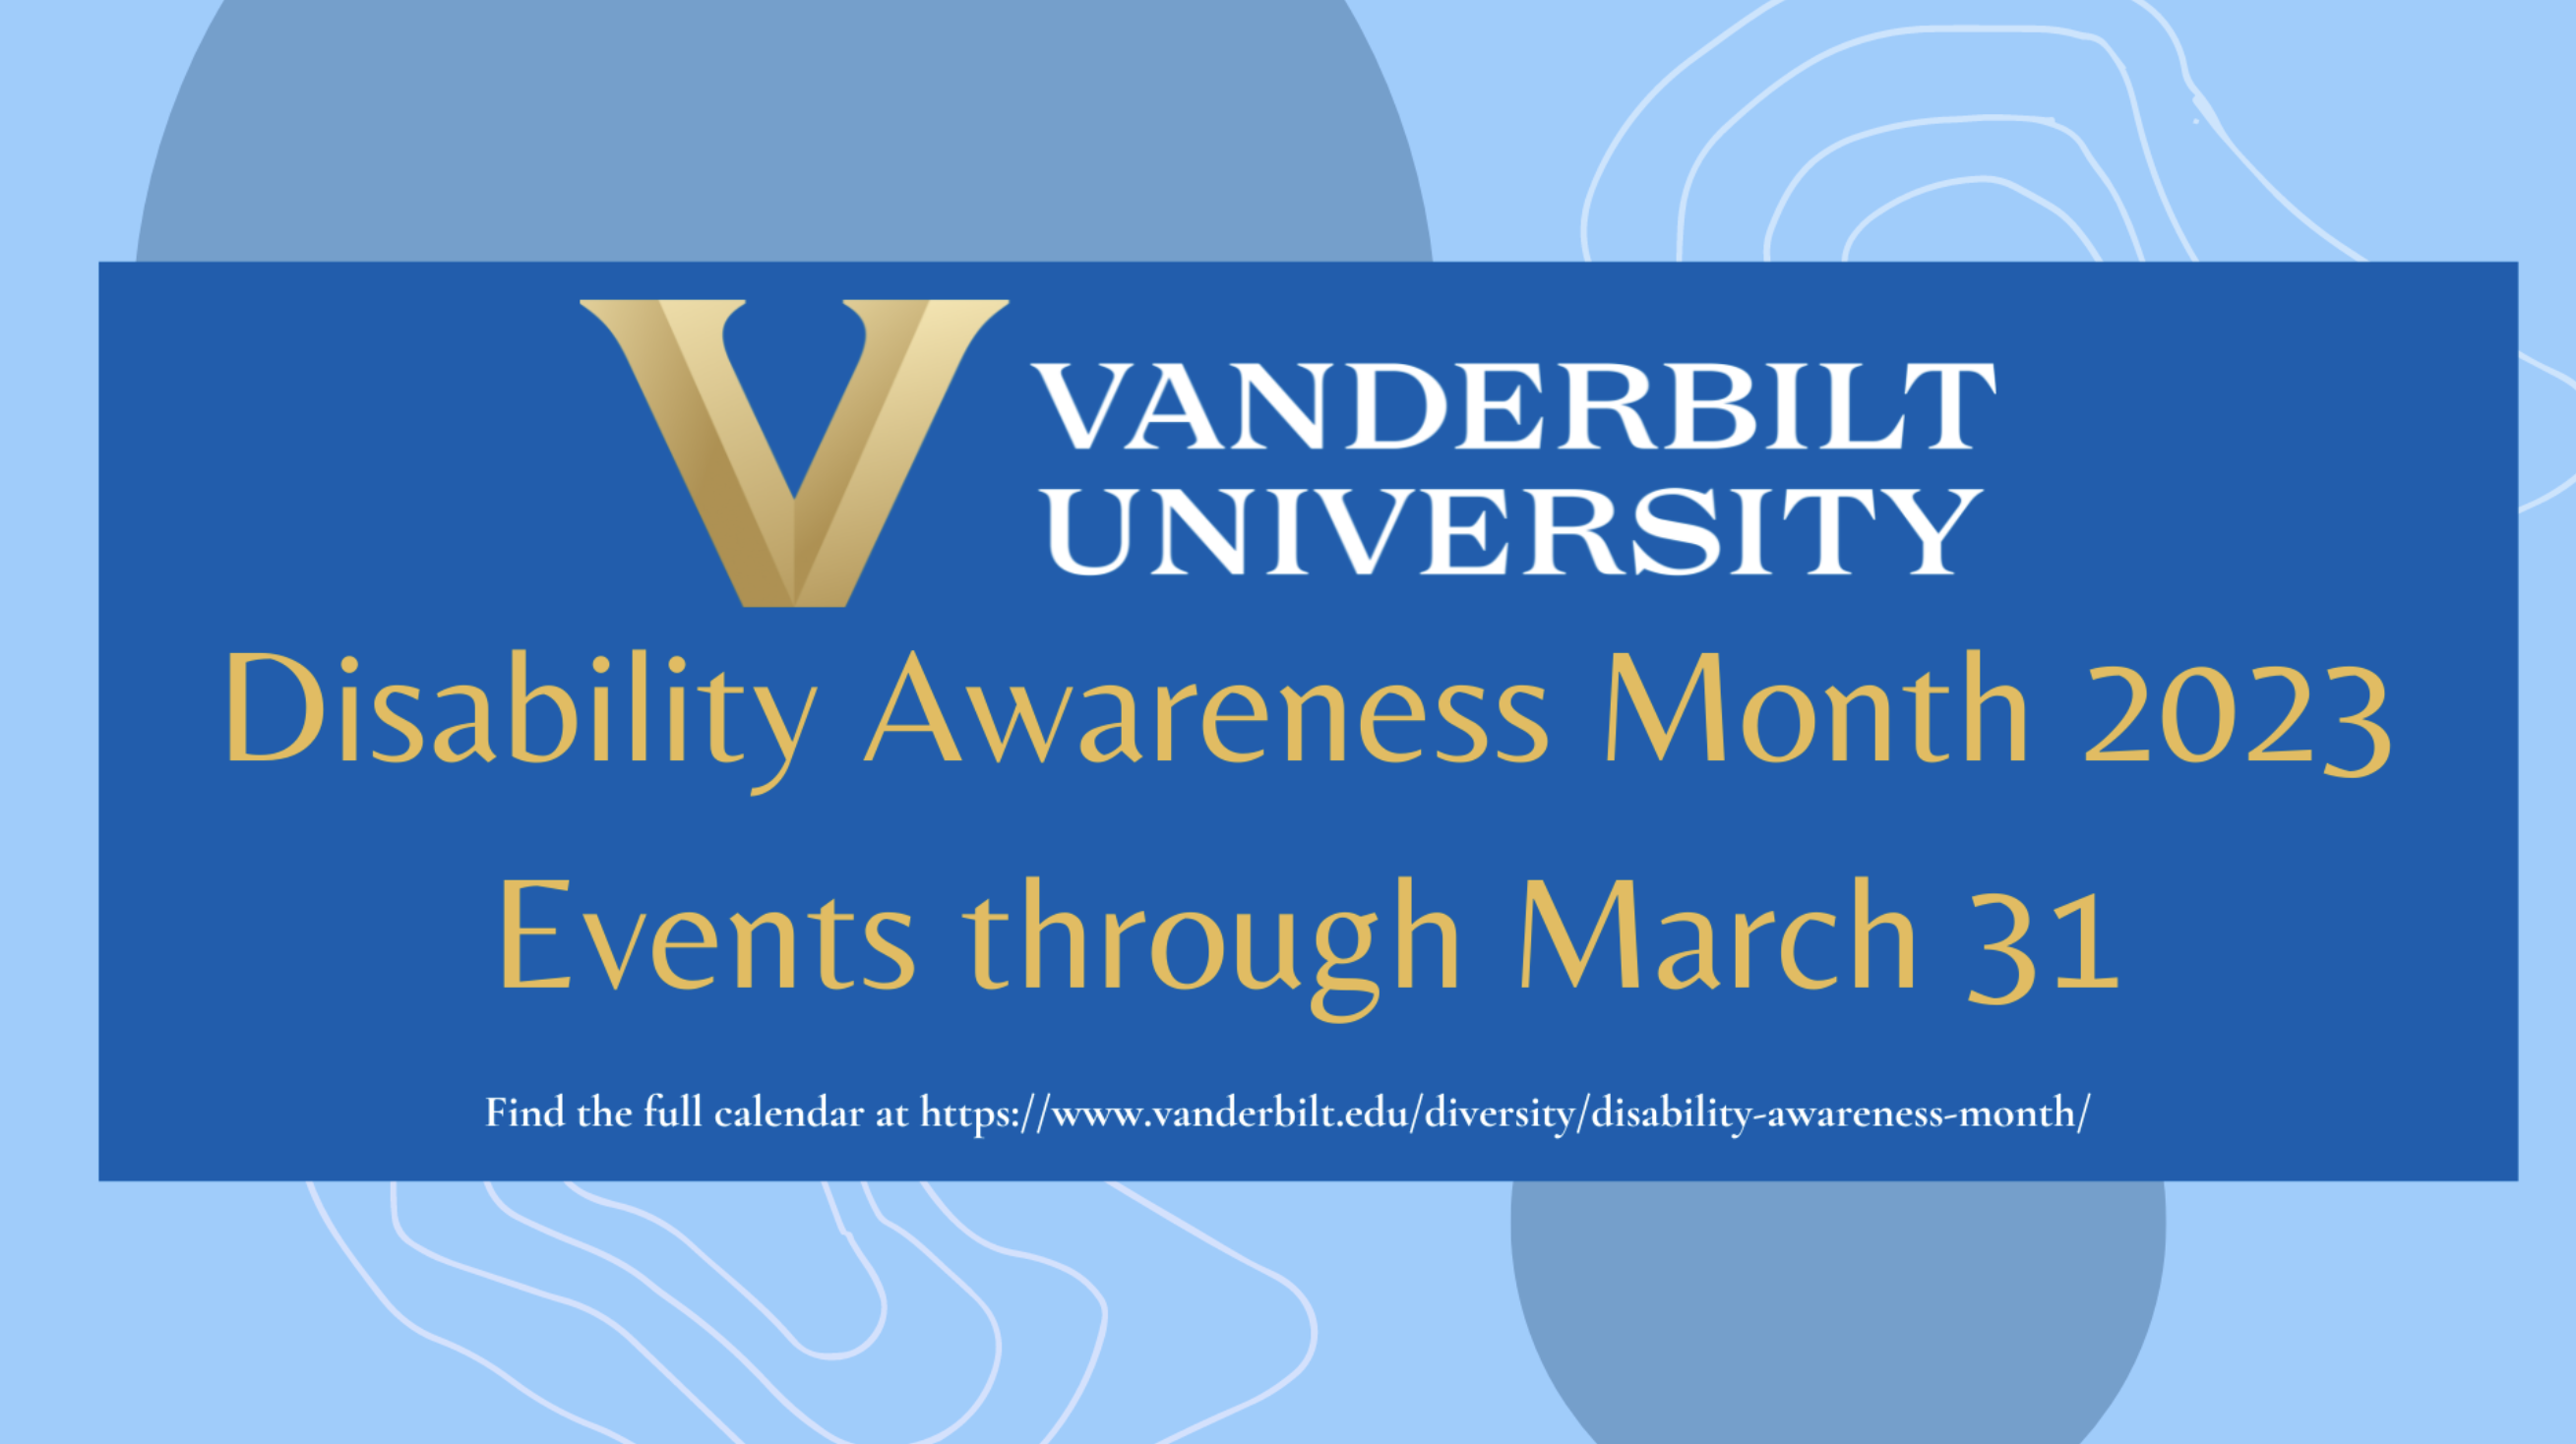 Vanderbilt celebrates Disability Awareness Month in March